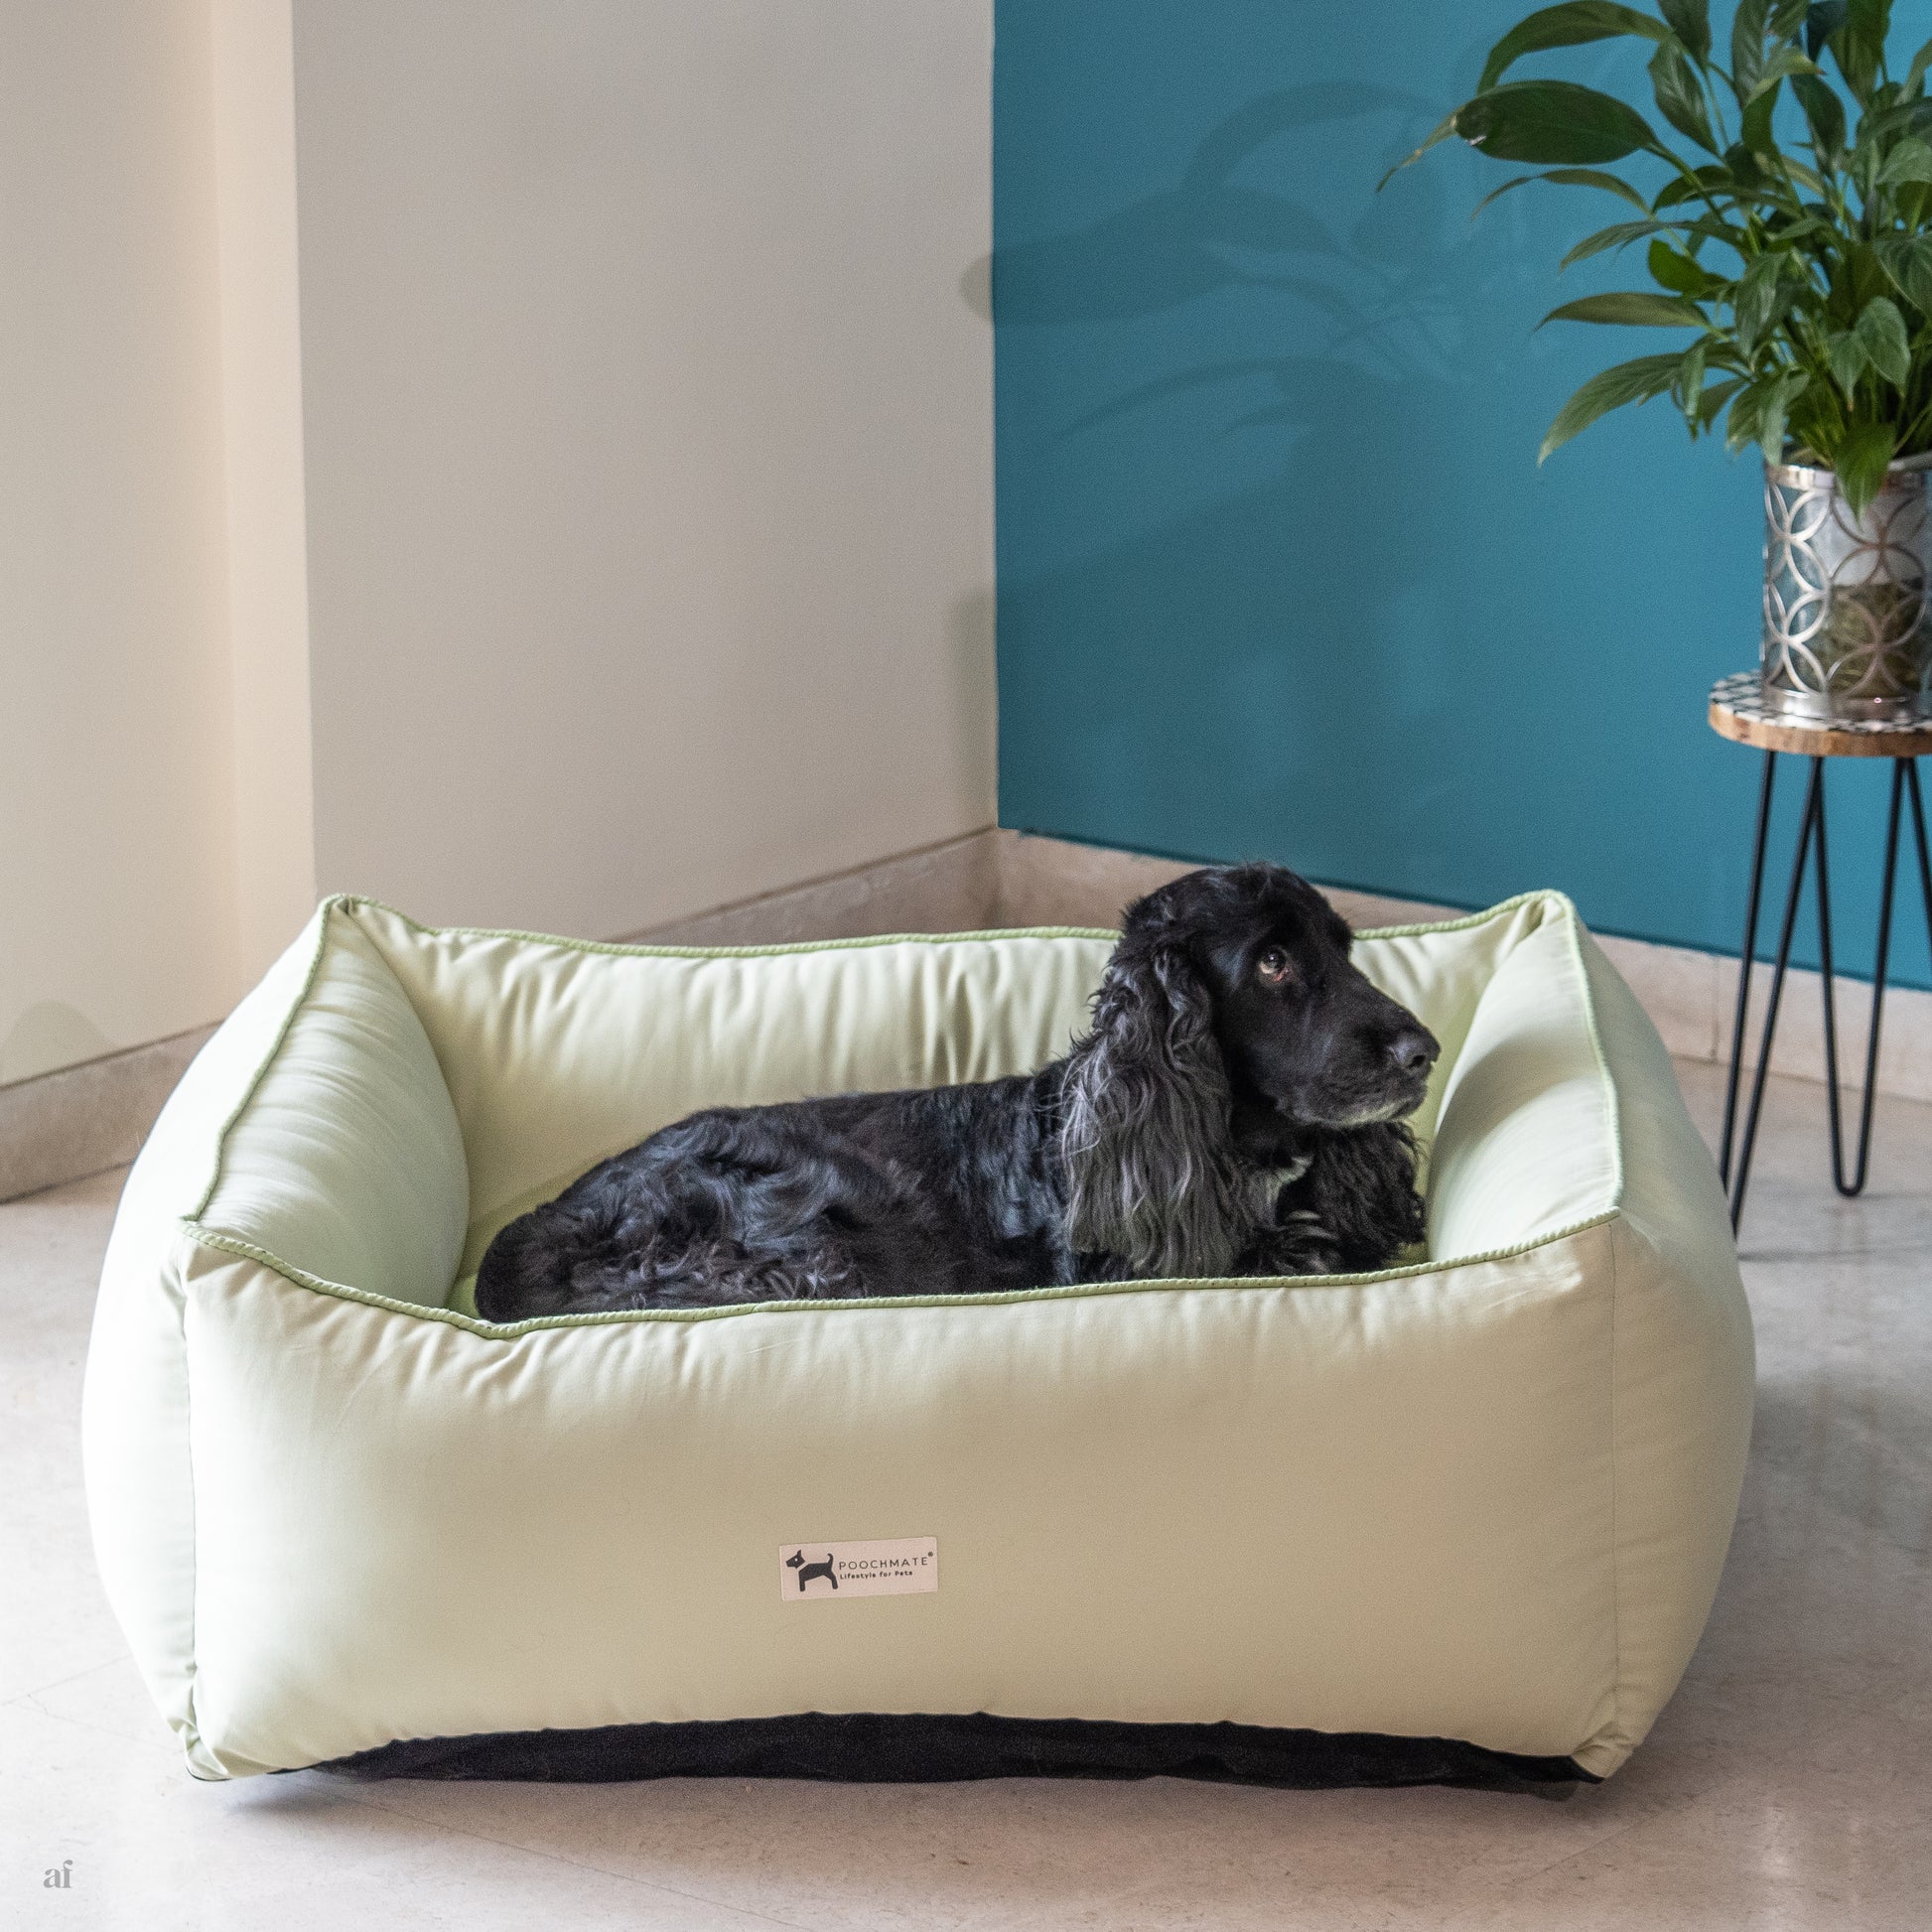 Best dog beds online in Dubai| Eco friendly dog beds online UAE